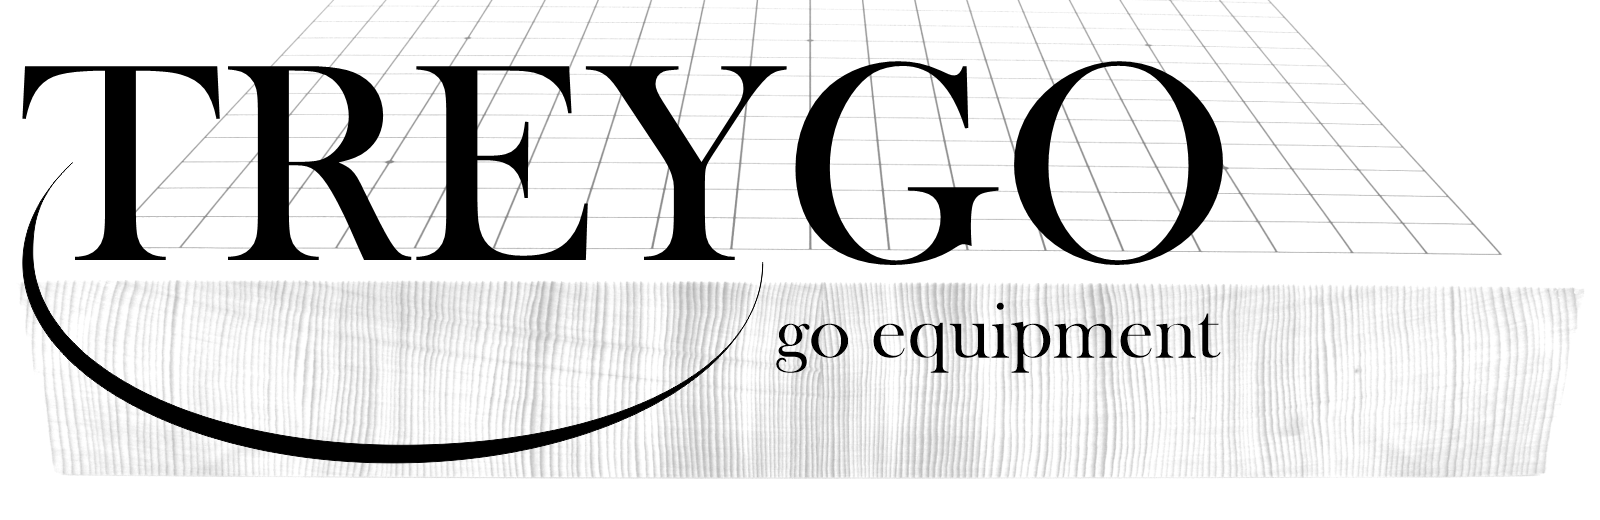 TREYGO – Game Go Equipment